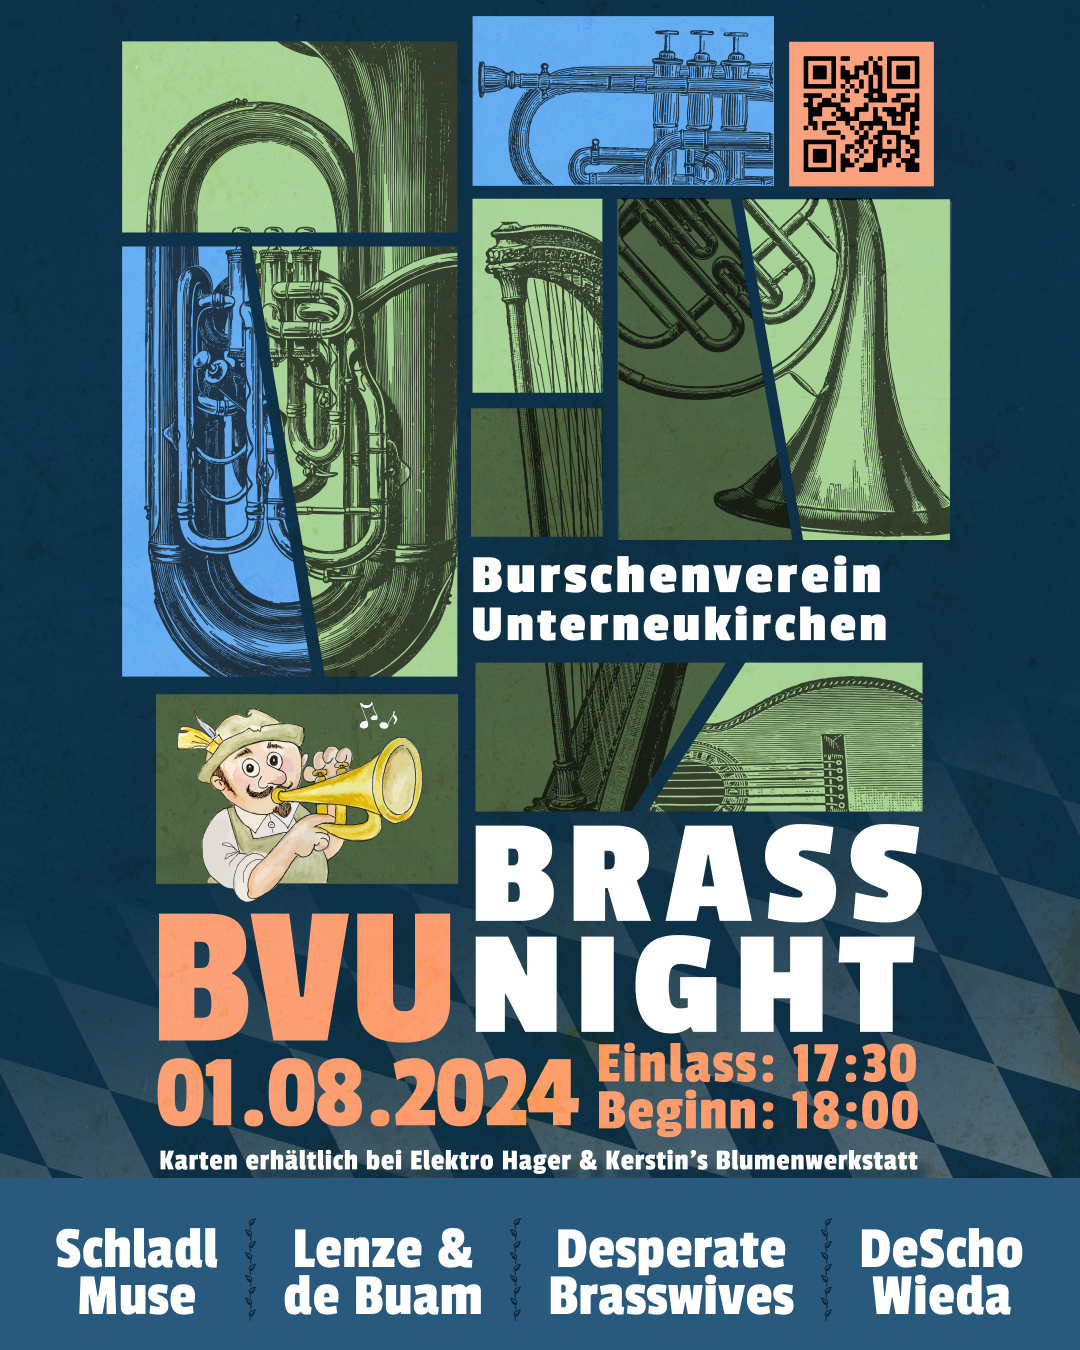 BVU Brass Night Flyer